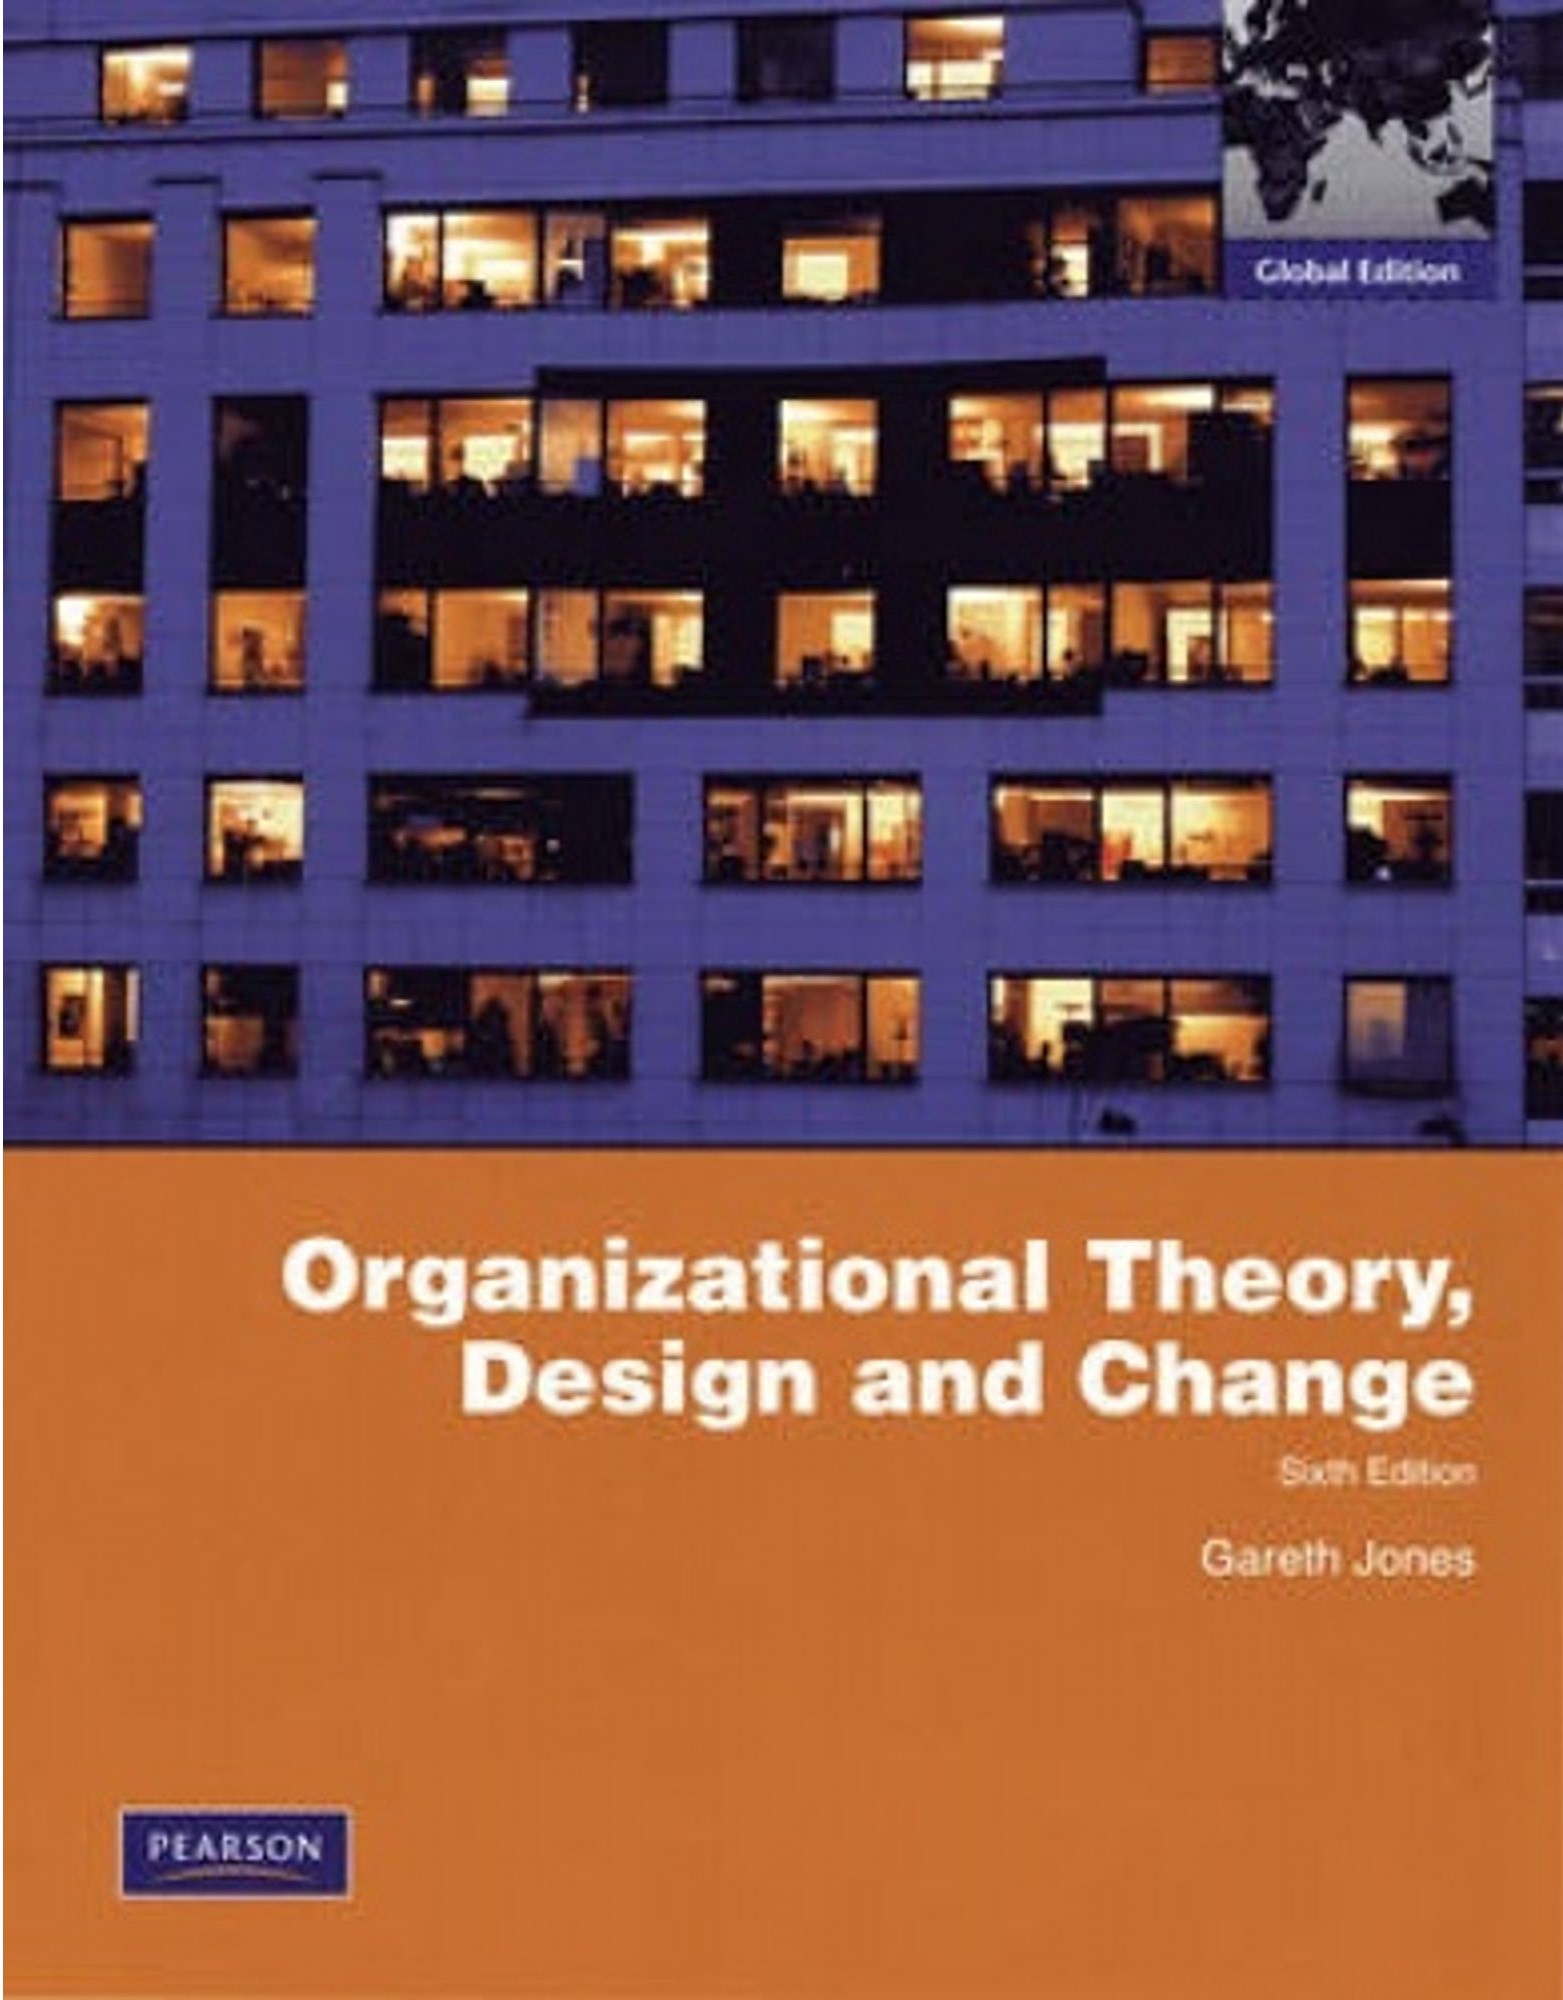 Organizational theory, design and change